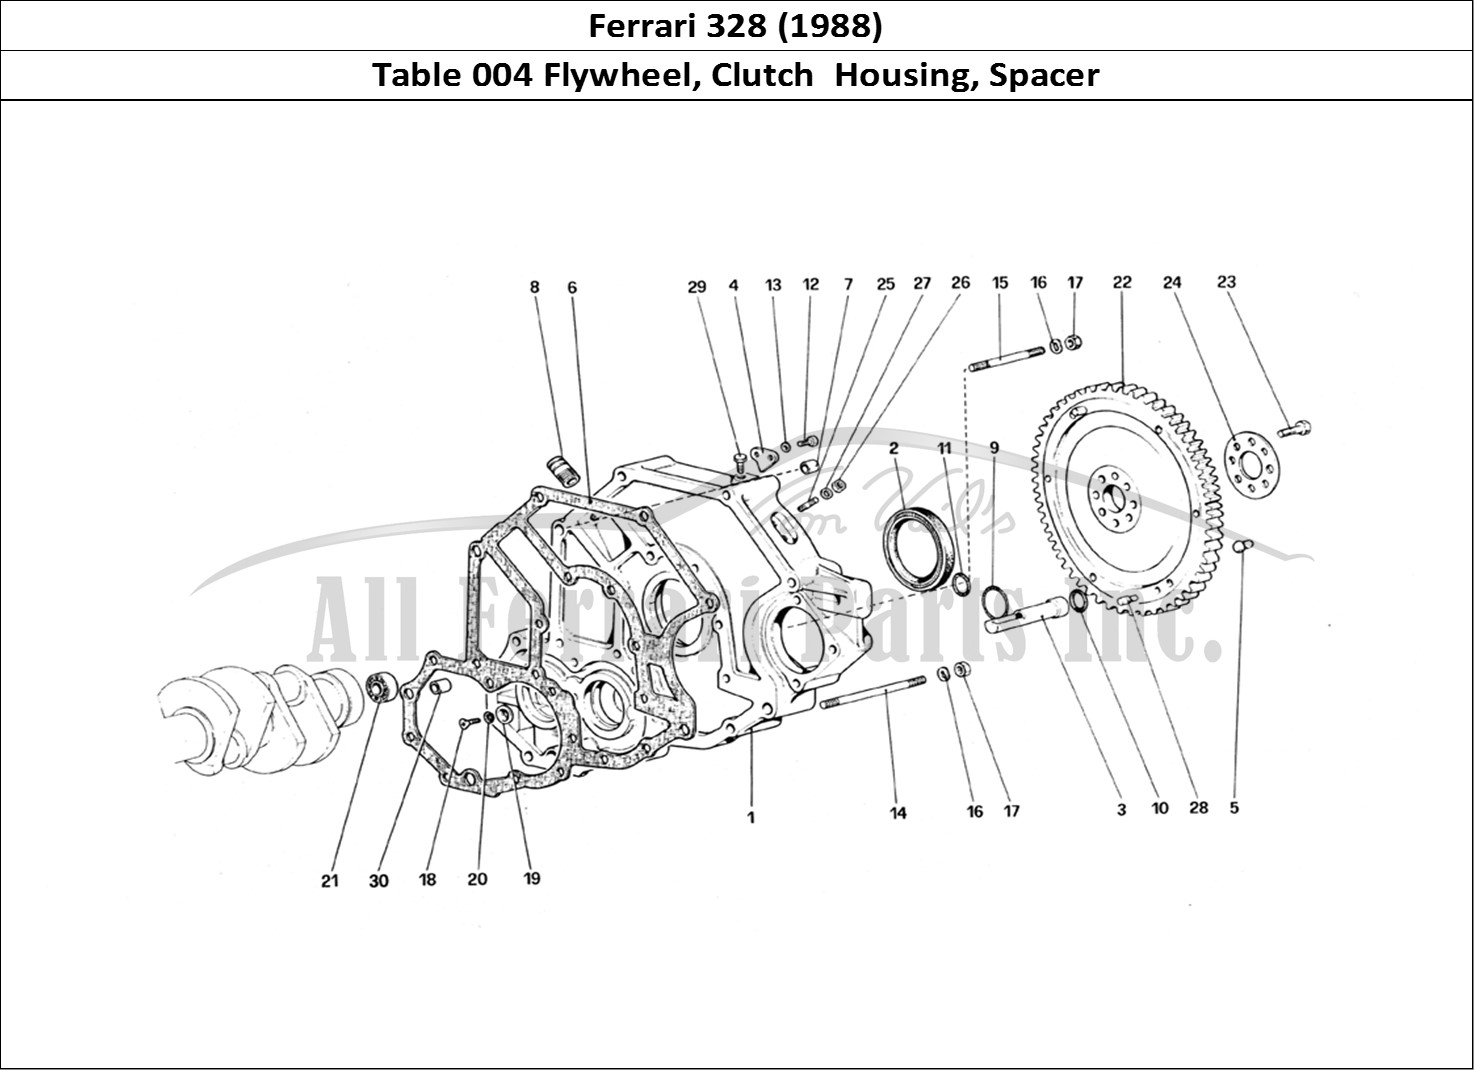 Ferrari Parts Ferrari 328 (1988) Page 004 Flywheel and Clutch Housi